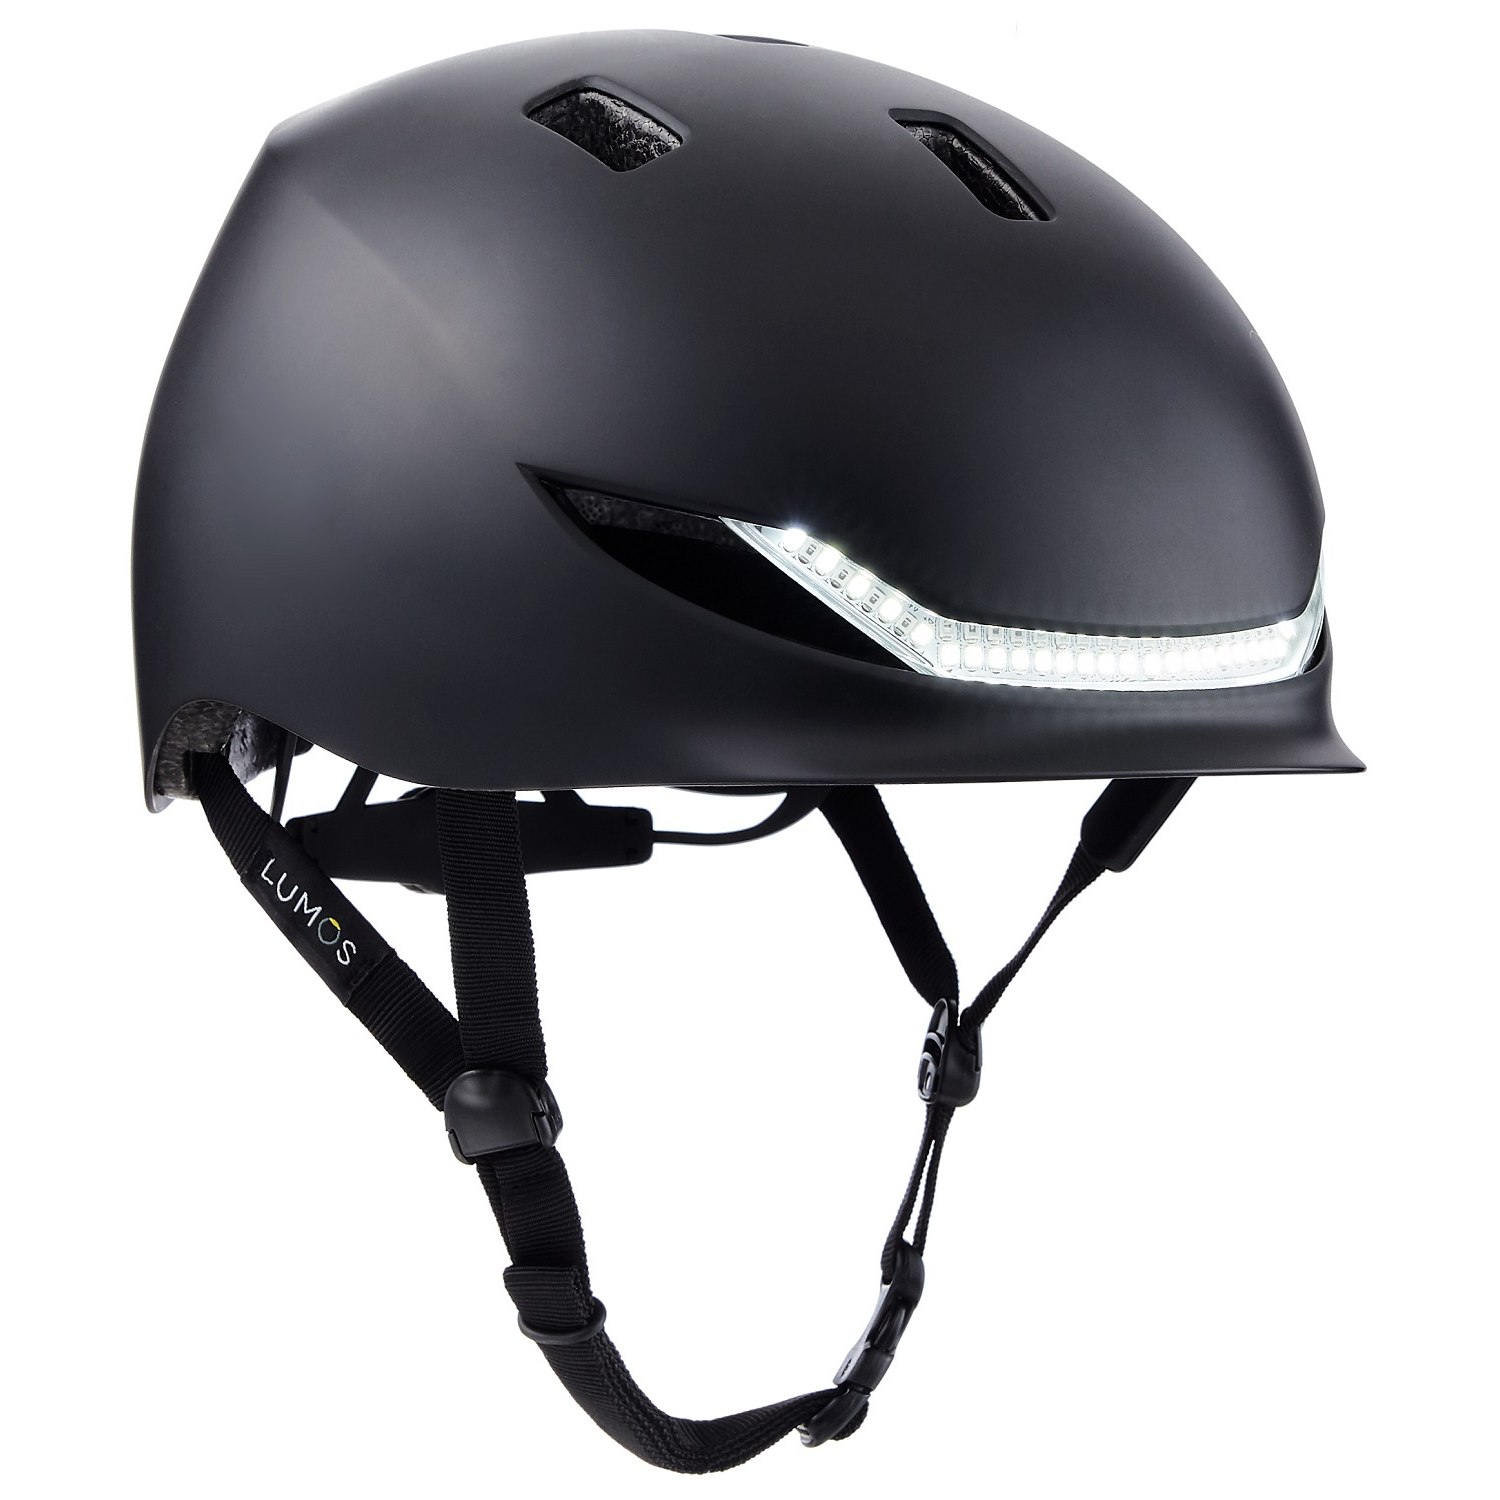 Productfoto van Lumos Matrix Helmet - Charcoal Black